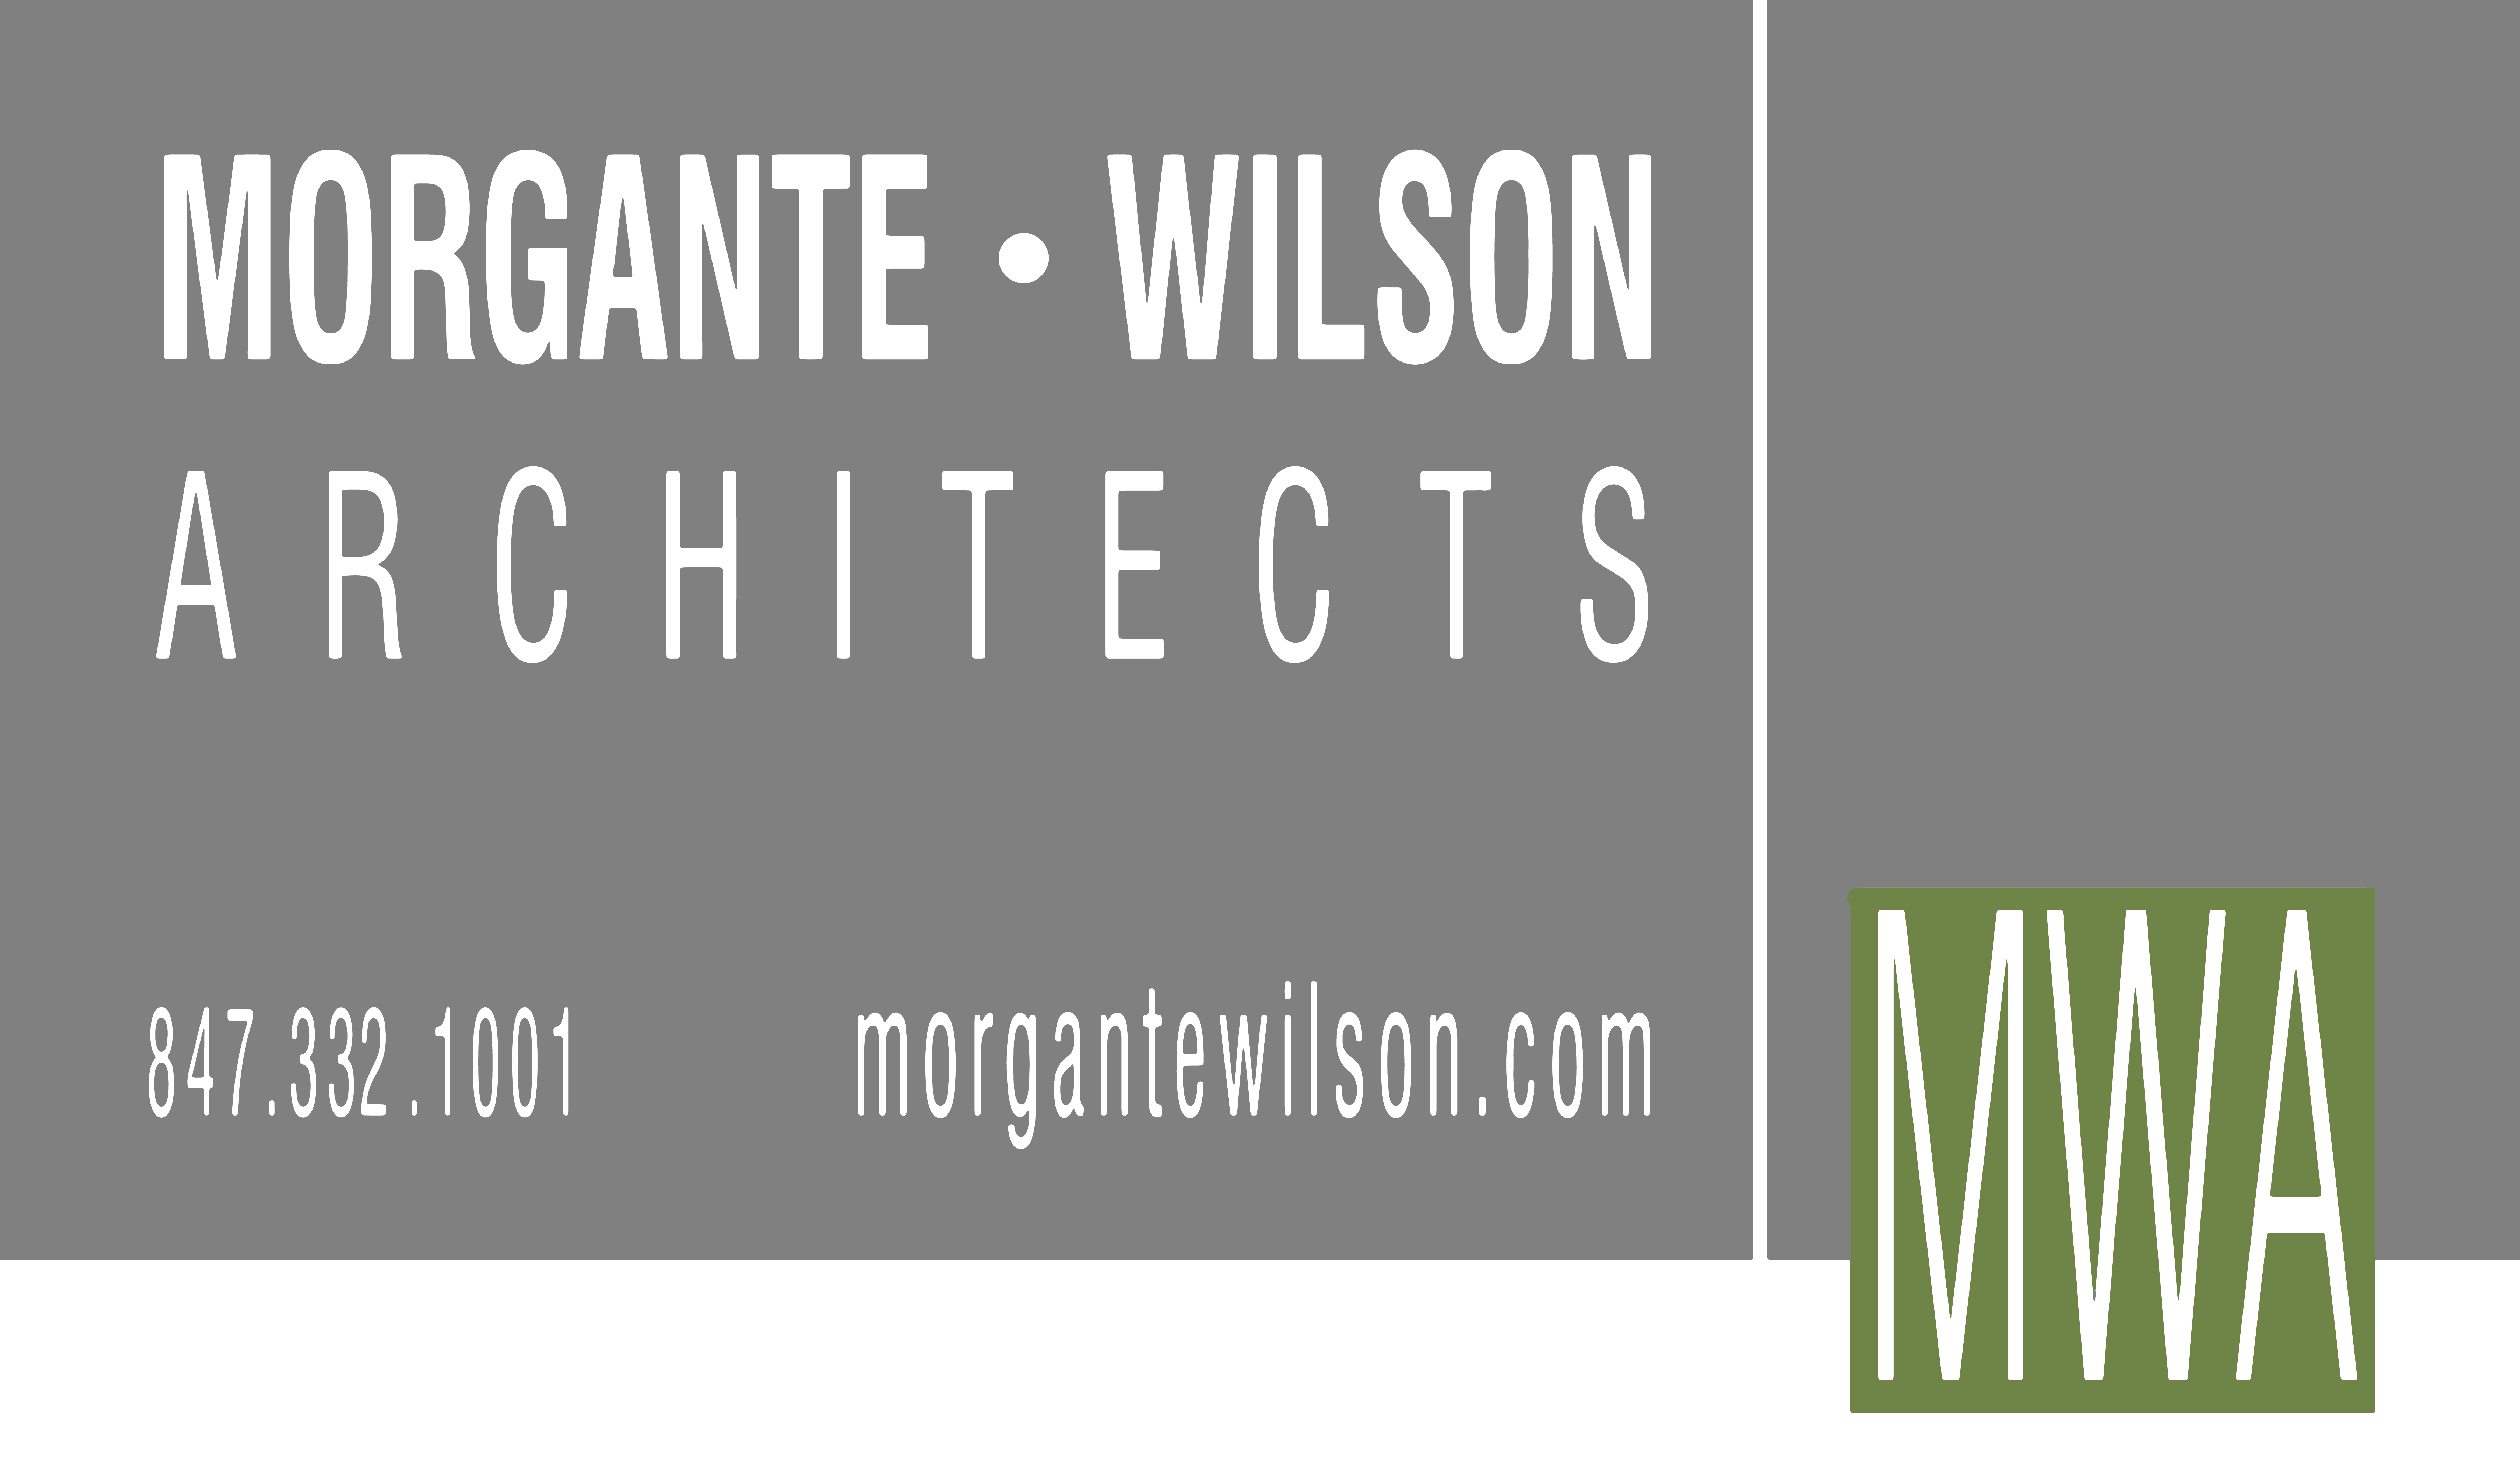 Morgante Wilson Architects 